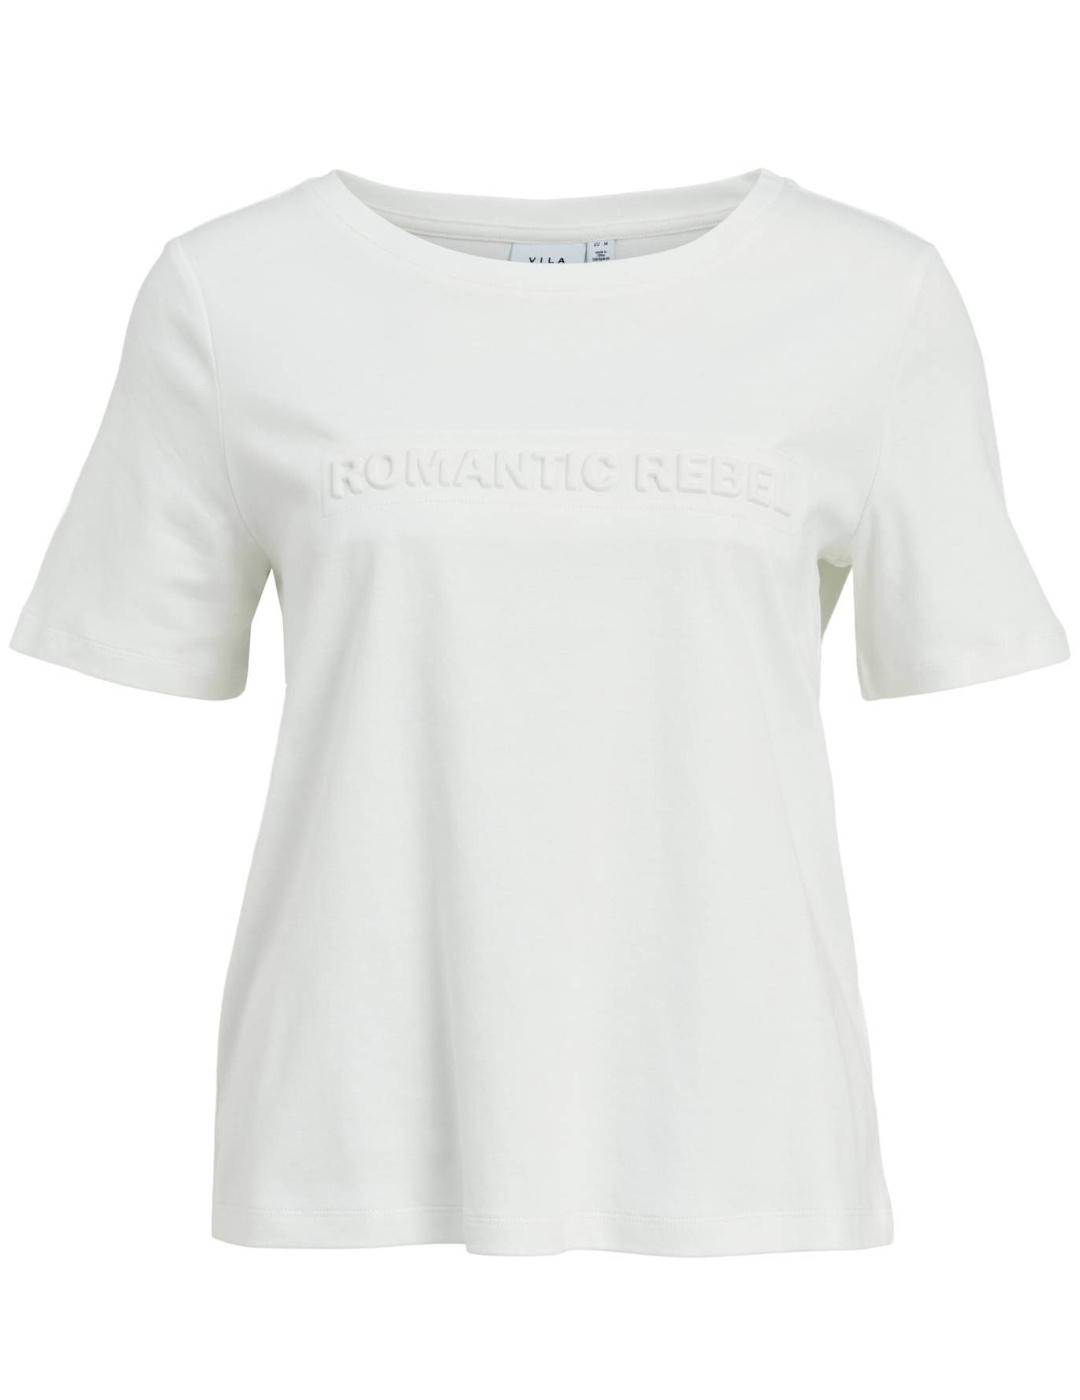 Camiseta Vila Rebel blanca para mujer-b